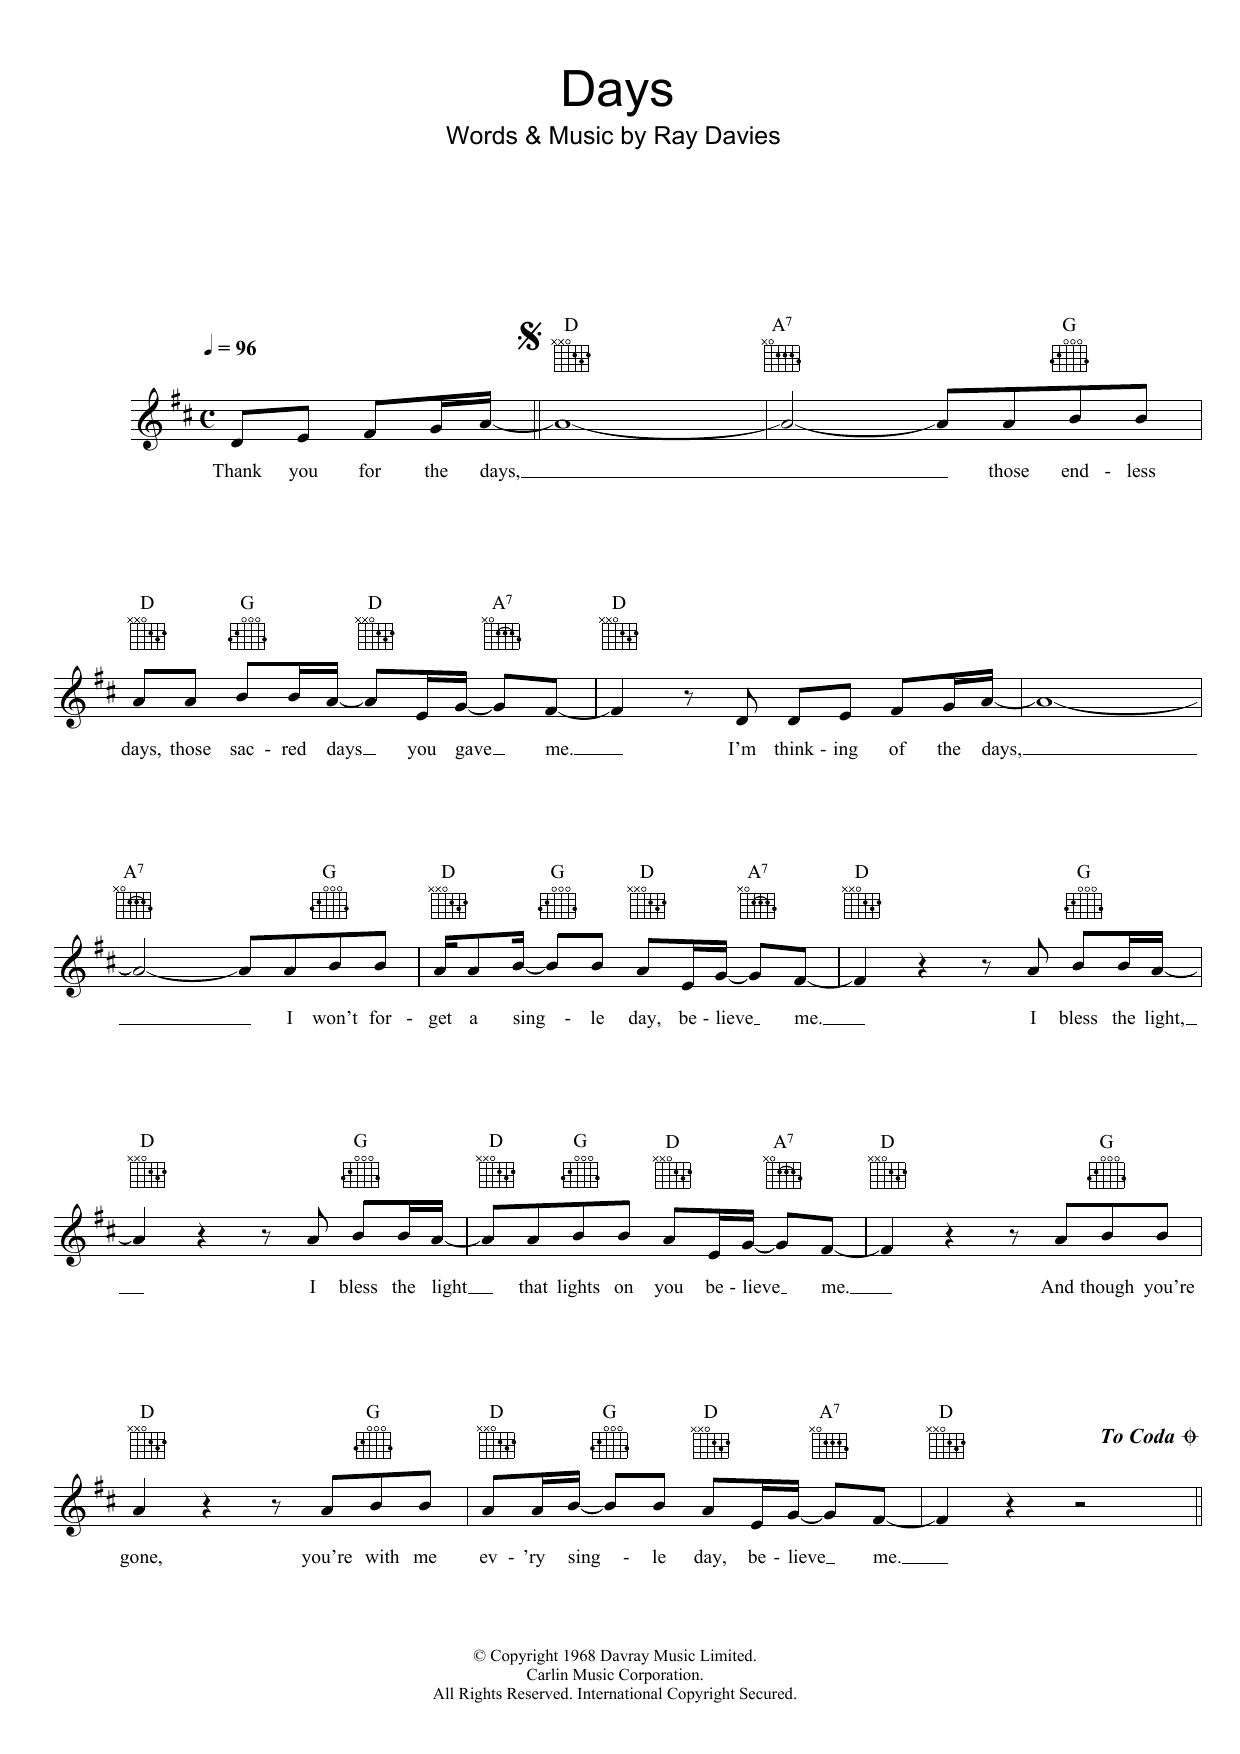 The Kinks Days Sheet Music Notes & Chords for Lyrics & Chords - Download or Print PDF